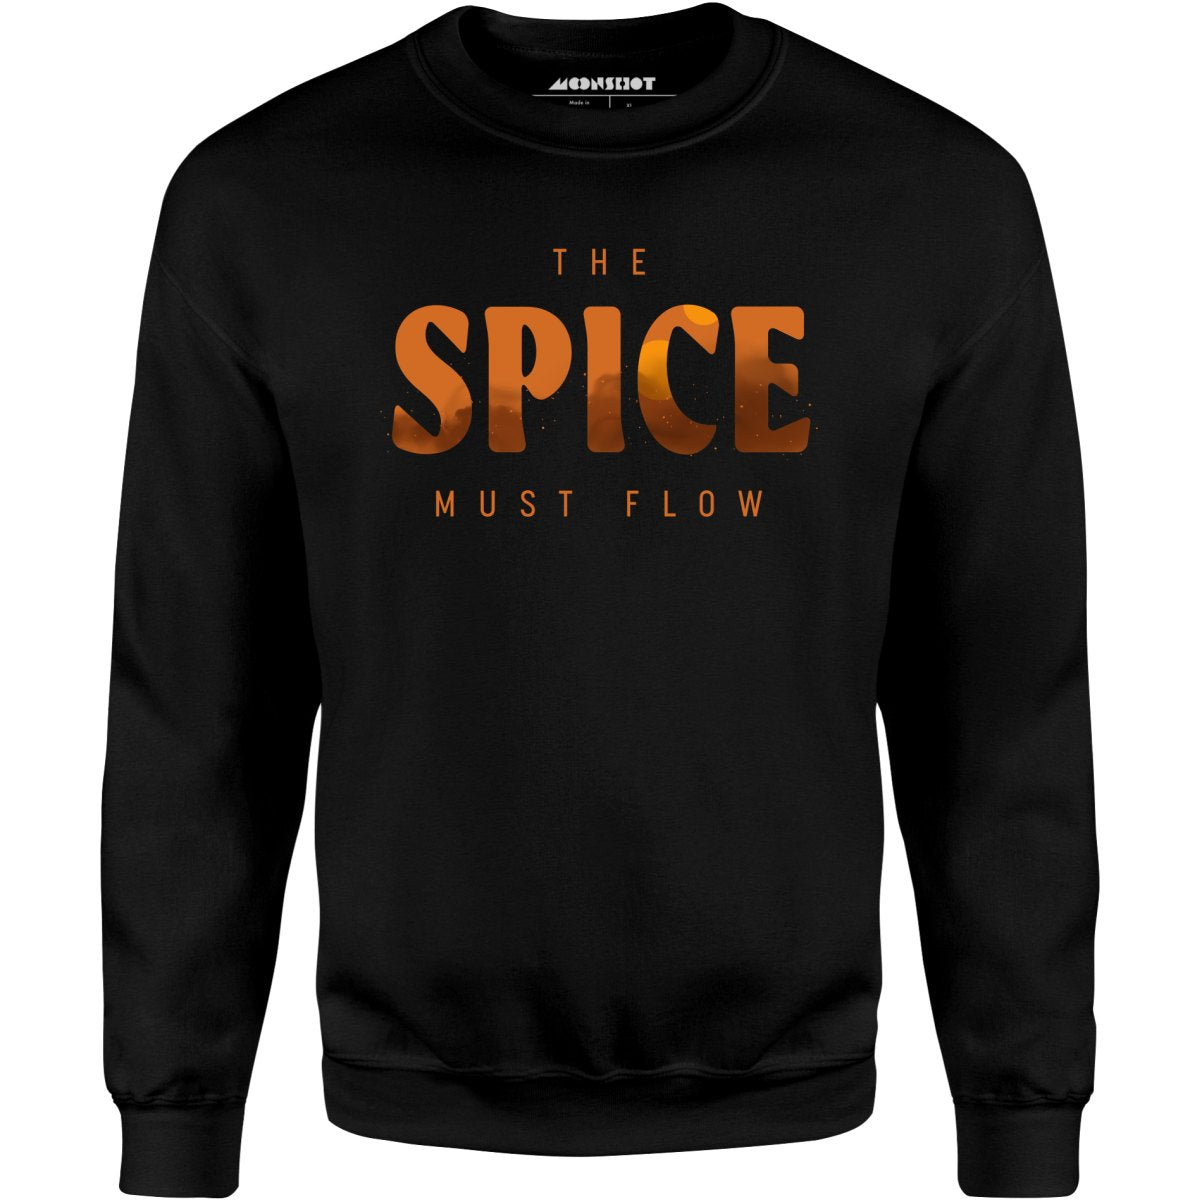 The Spice Must Flow - Unisex Sweatshirt